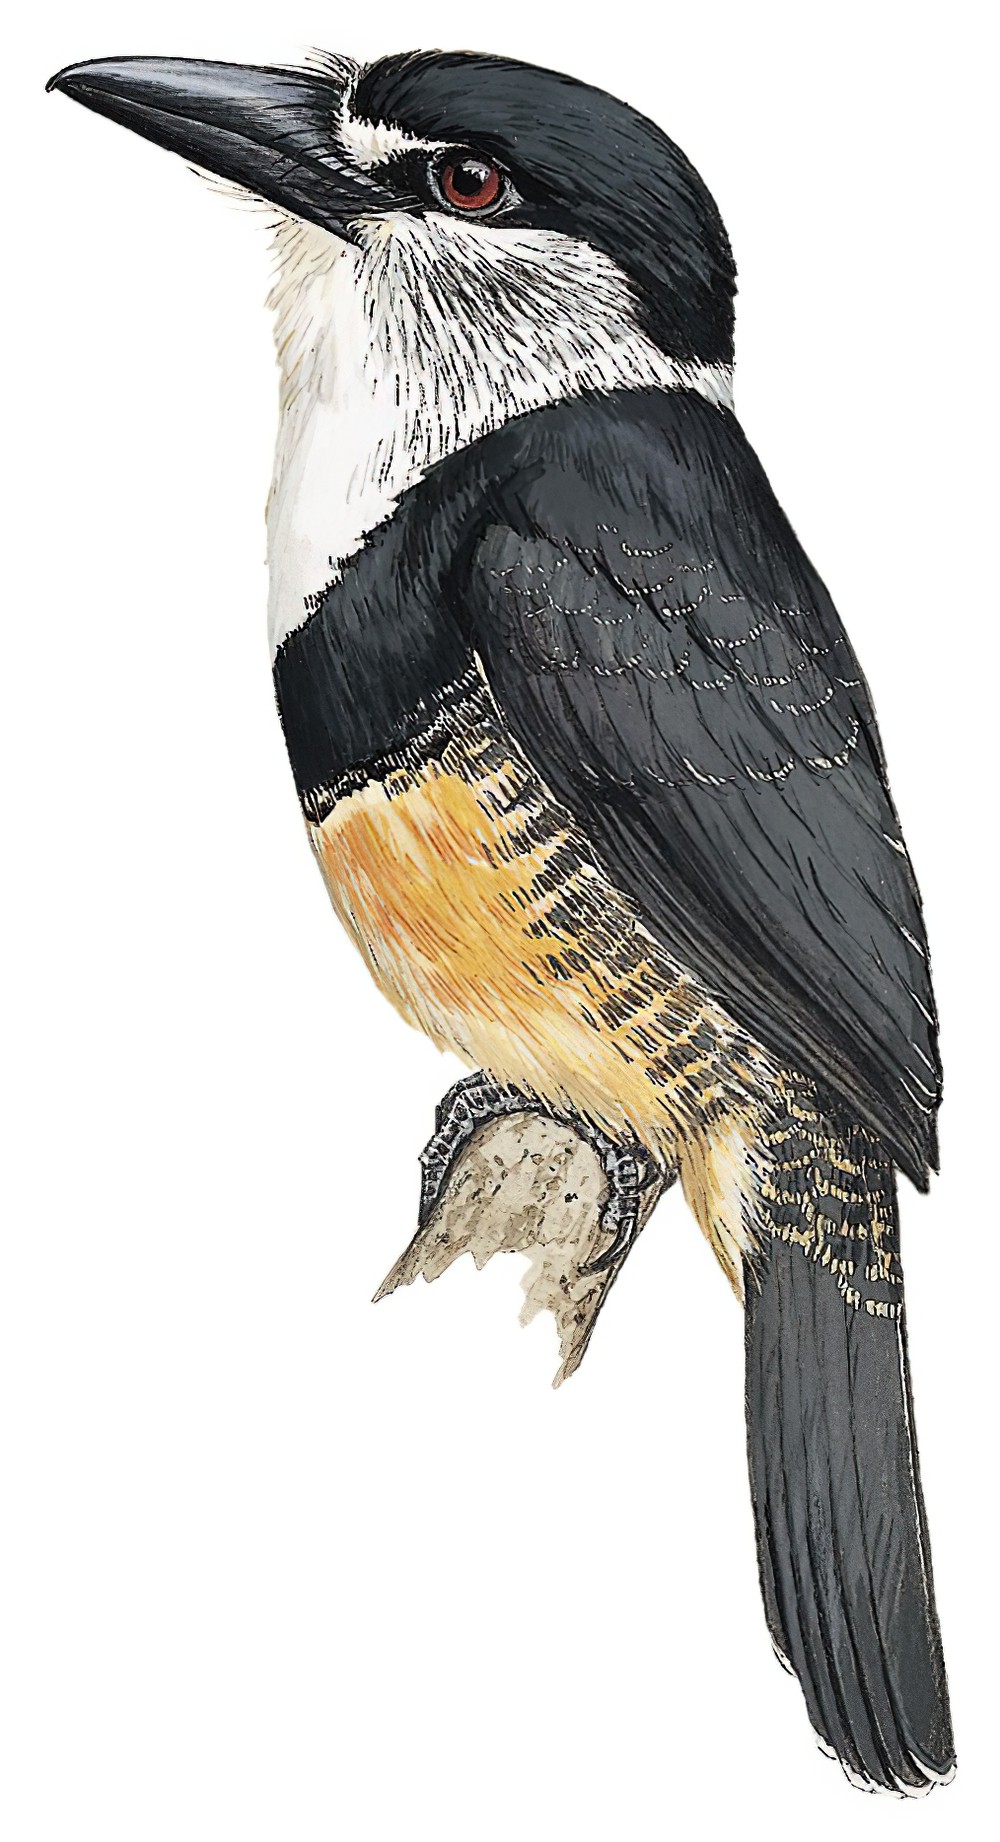 Buff-bellied Puffbird / Notharchus swainsoni